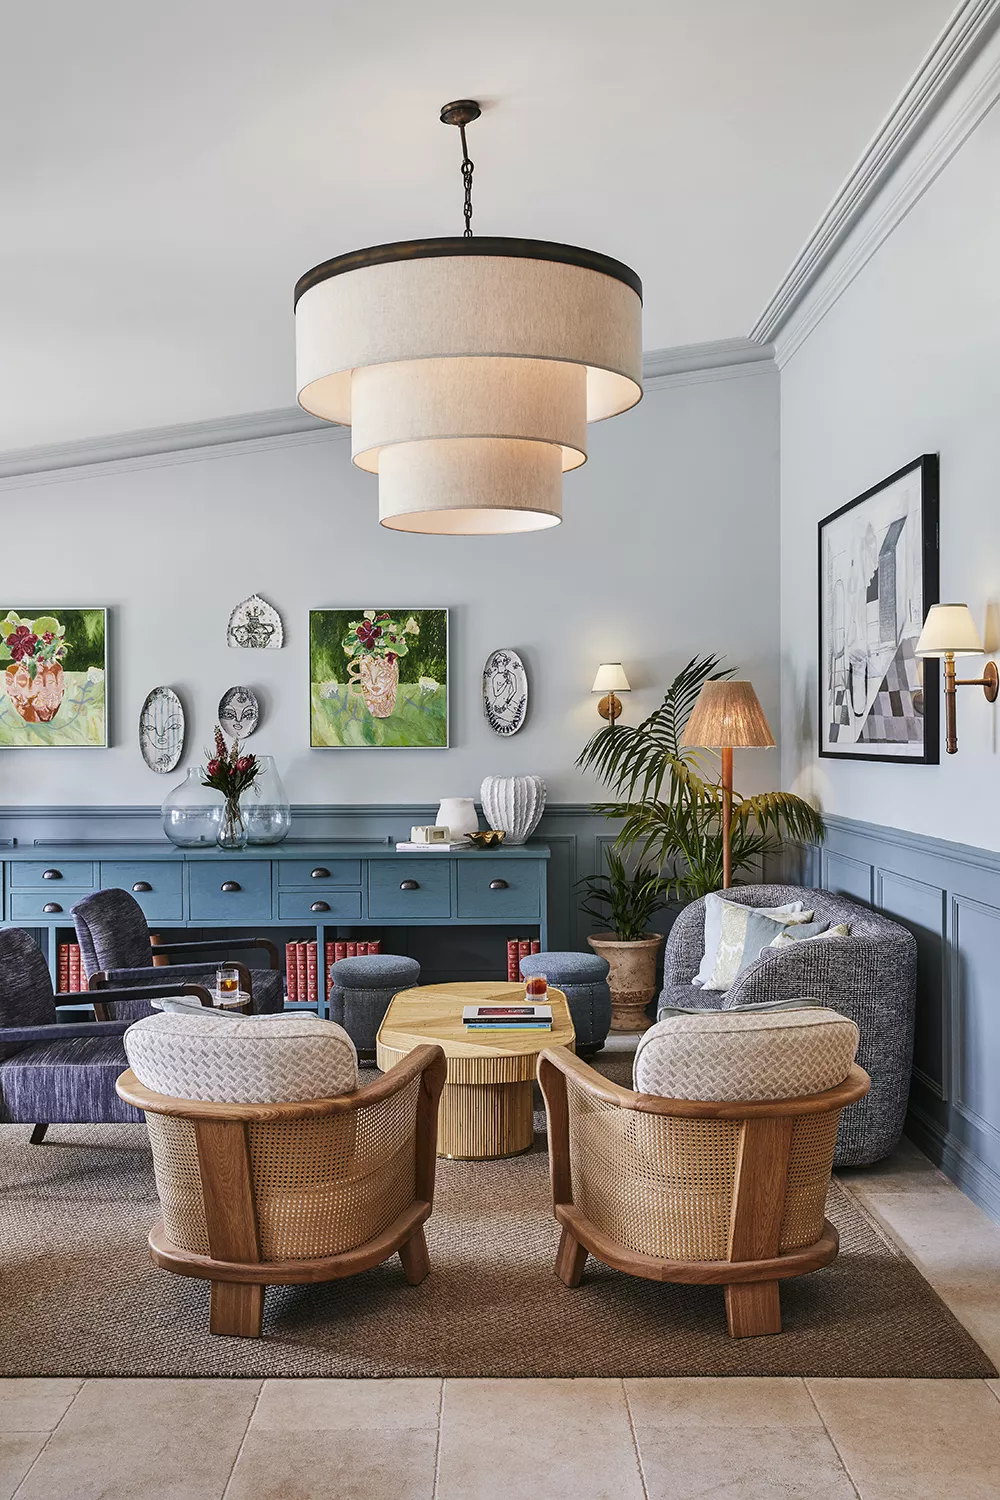 A top interior designer explains 5 ways decor can make a small space seem bigger